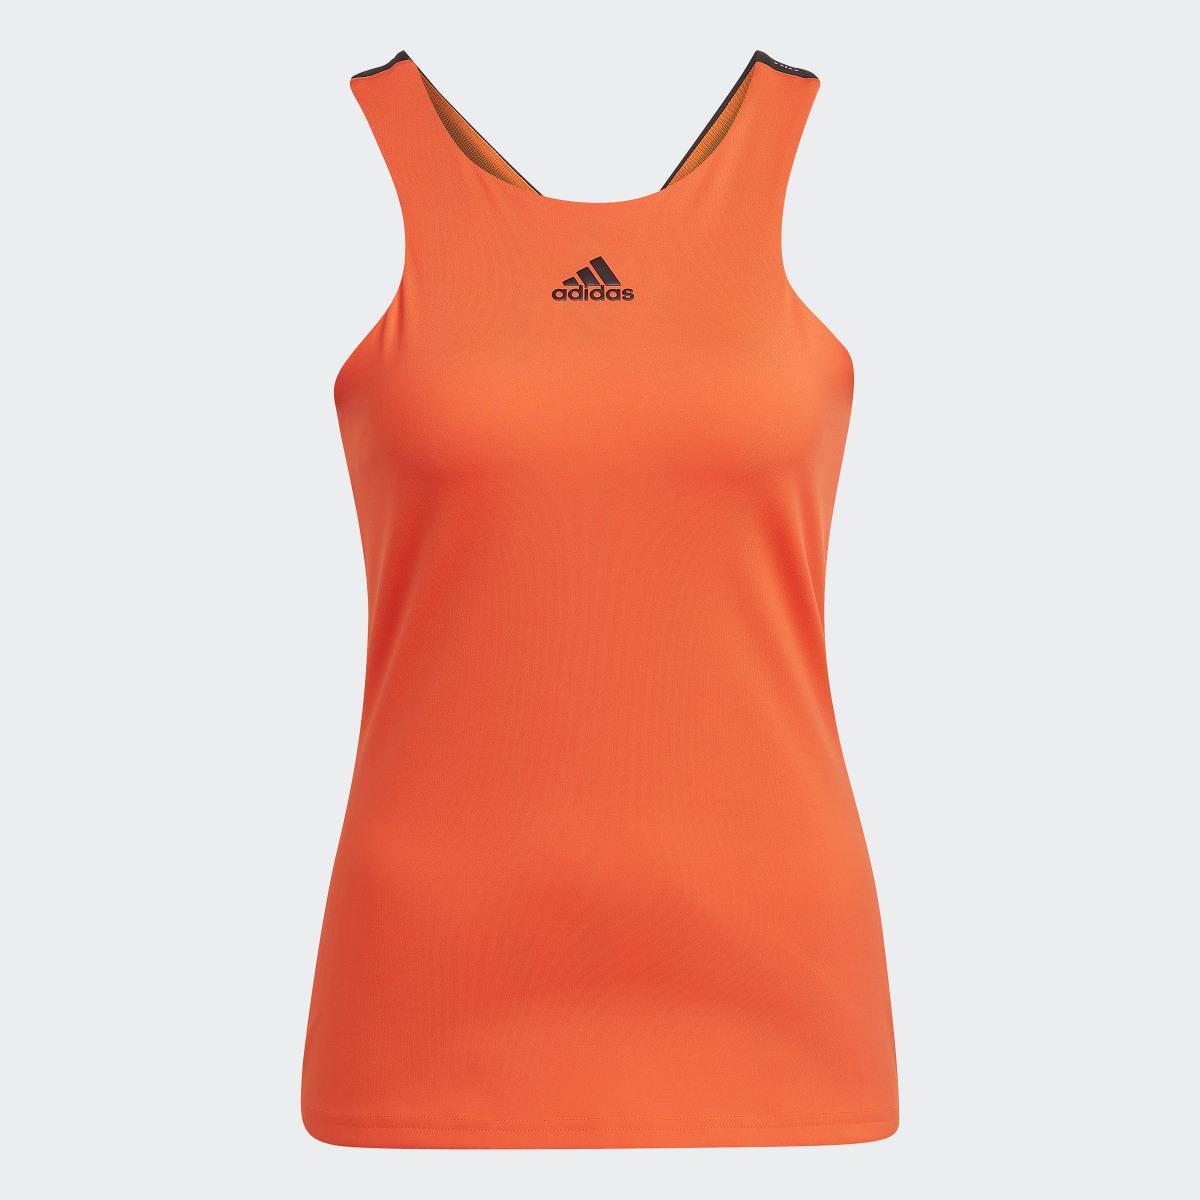 Adidas Camiseta de tirantes Tennis. 6